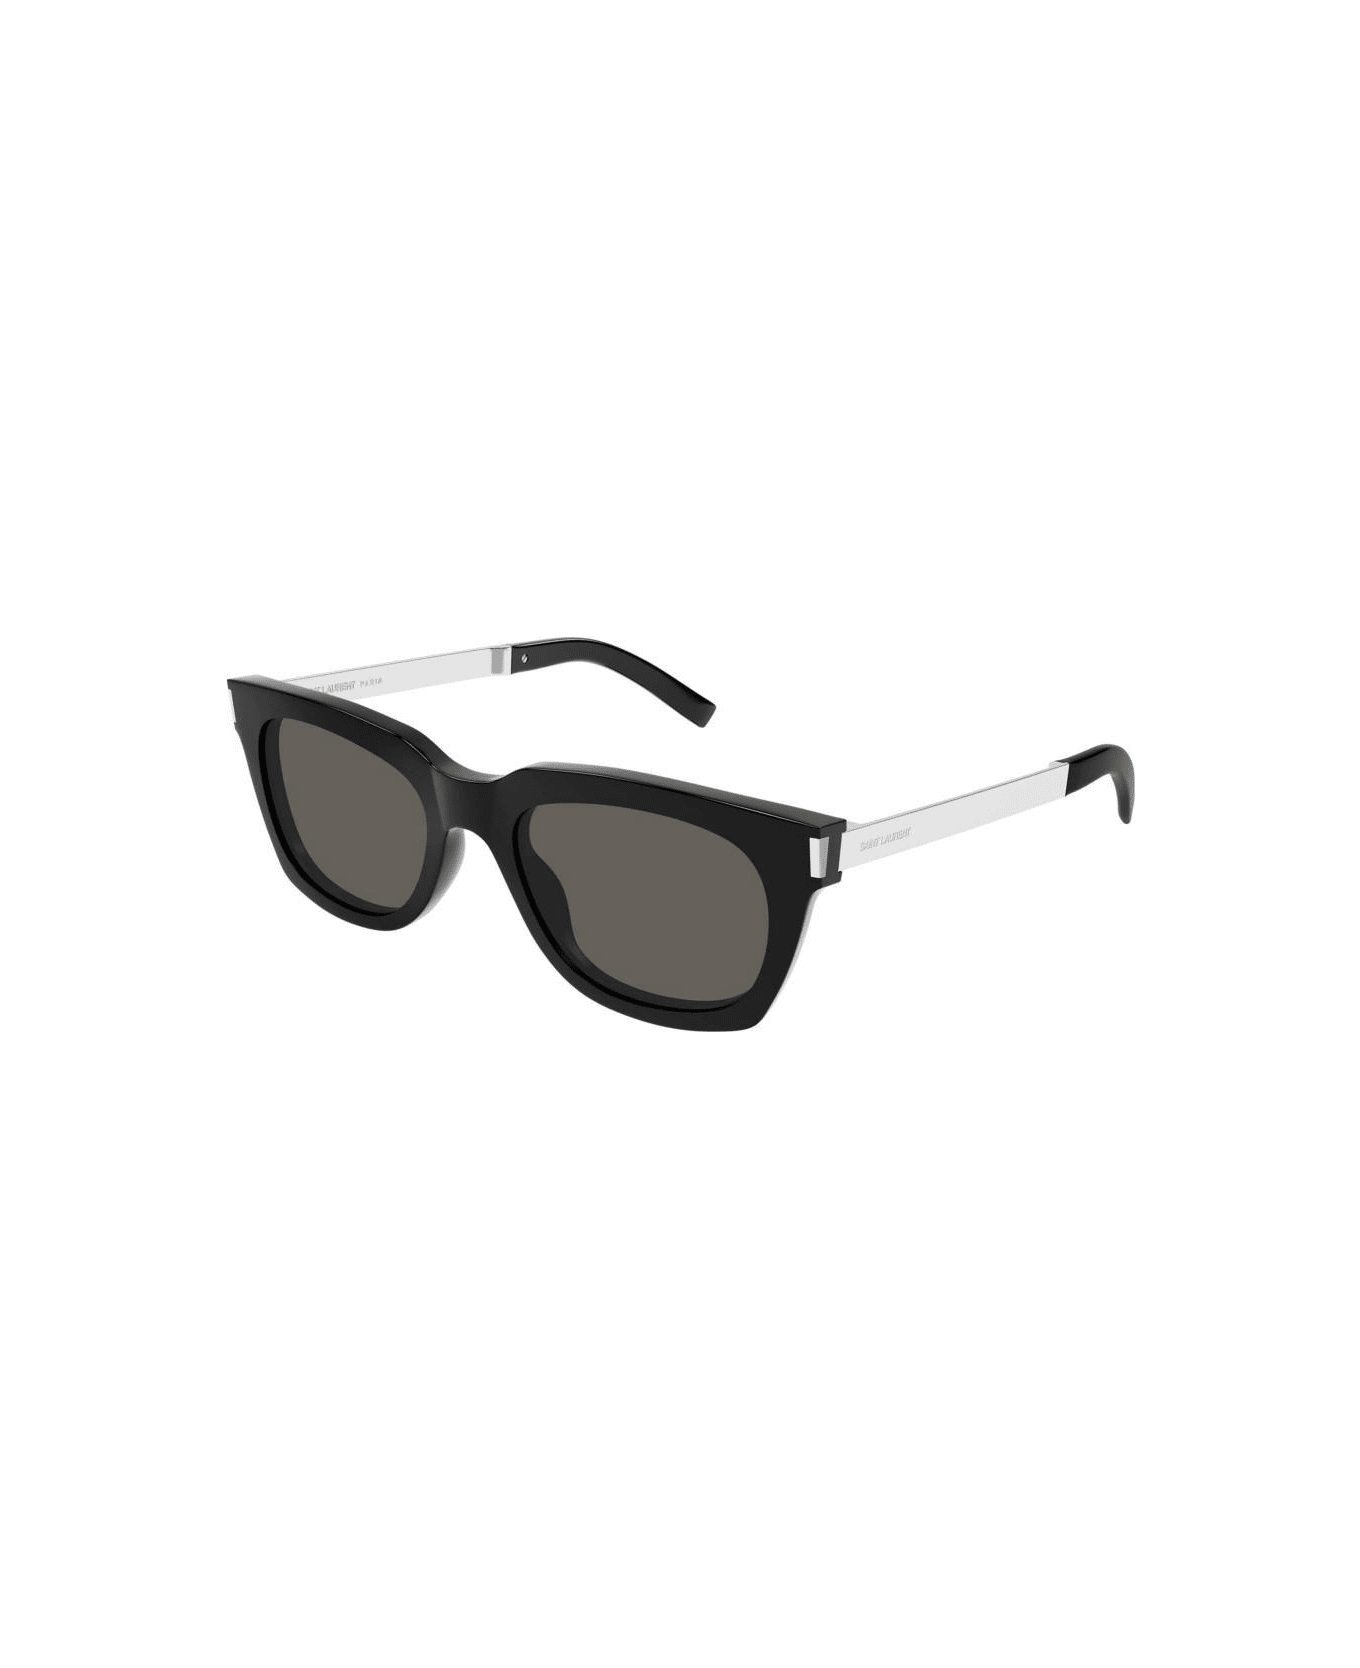 Saint Laurent Eyewear Square Frame Sunglasses Sunglasses - 001 BLACK SILVER GREY